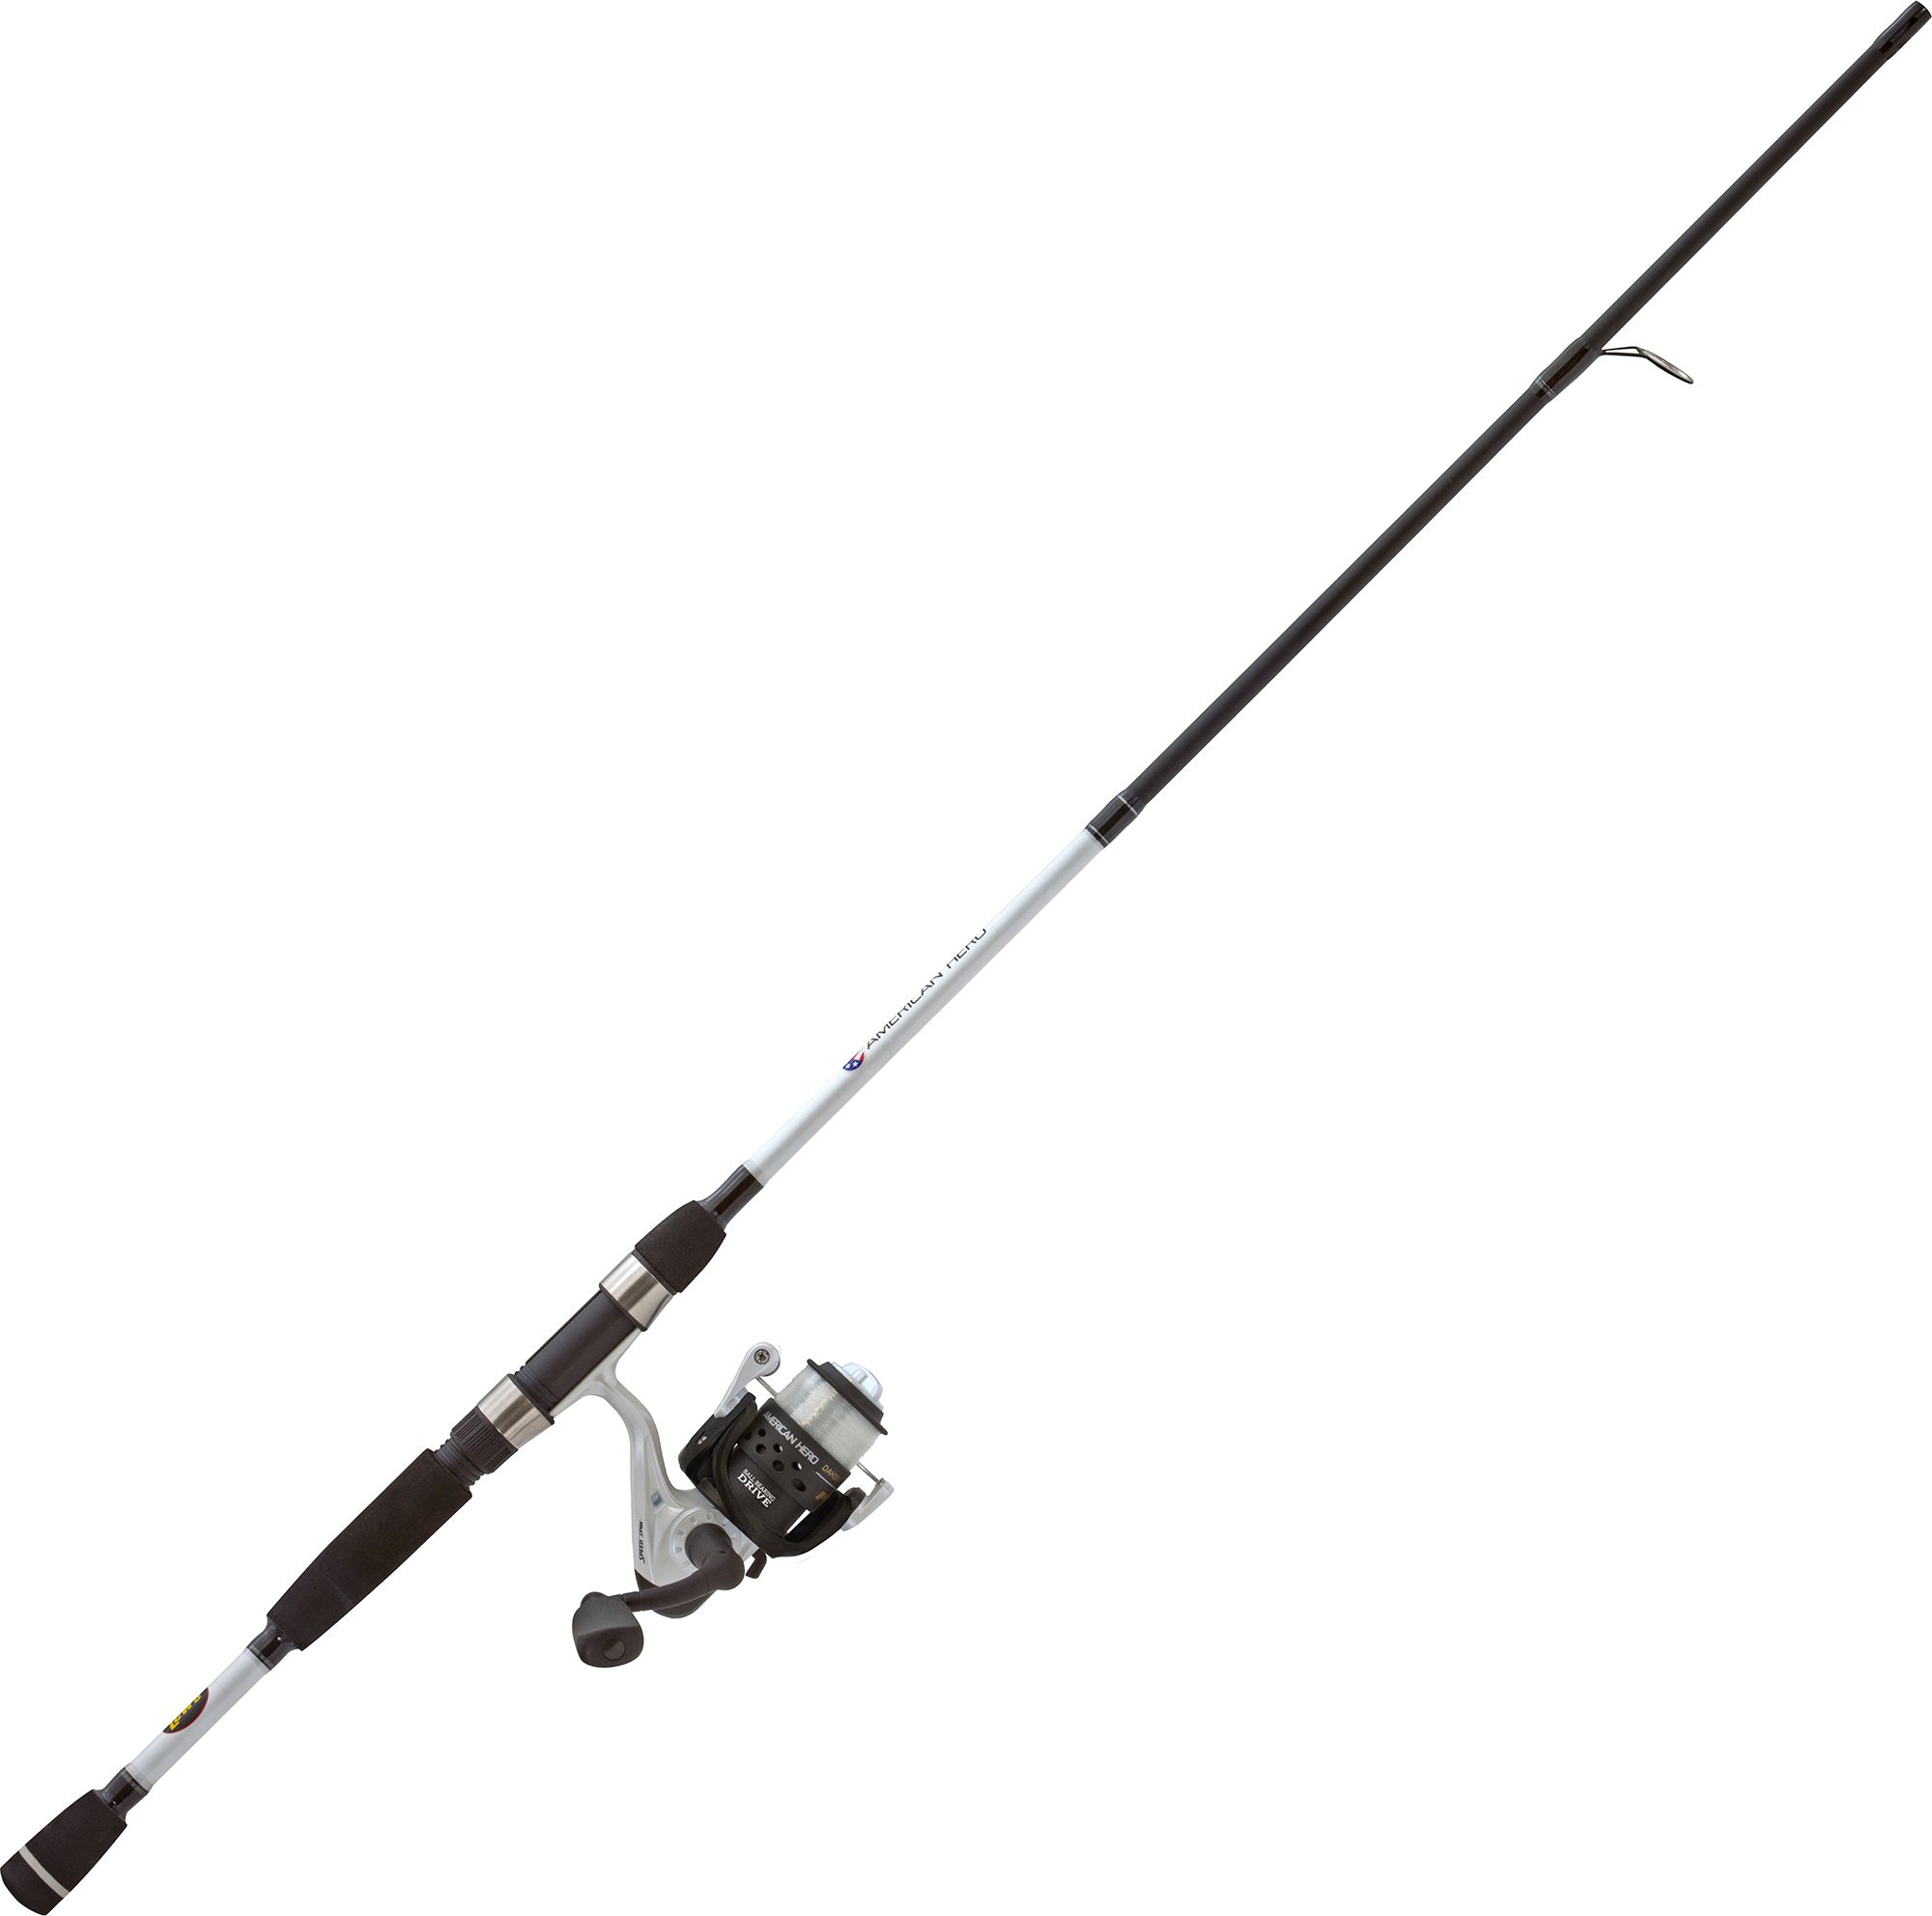 Quantum Bait Caster fishing pole - Fishing - Abington